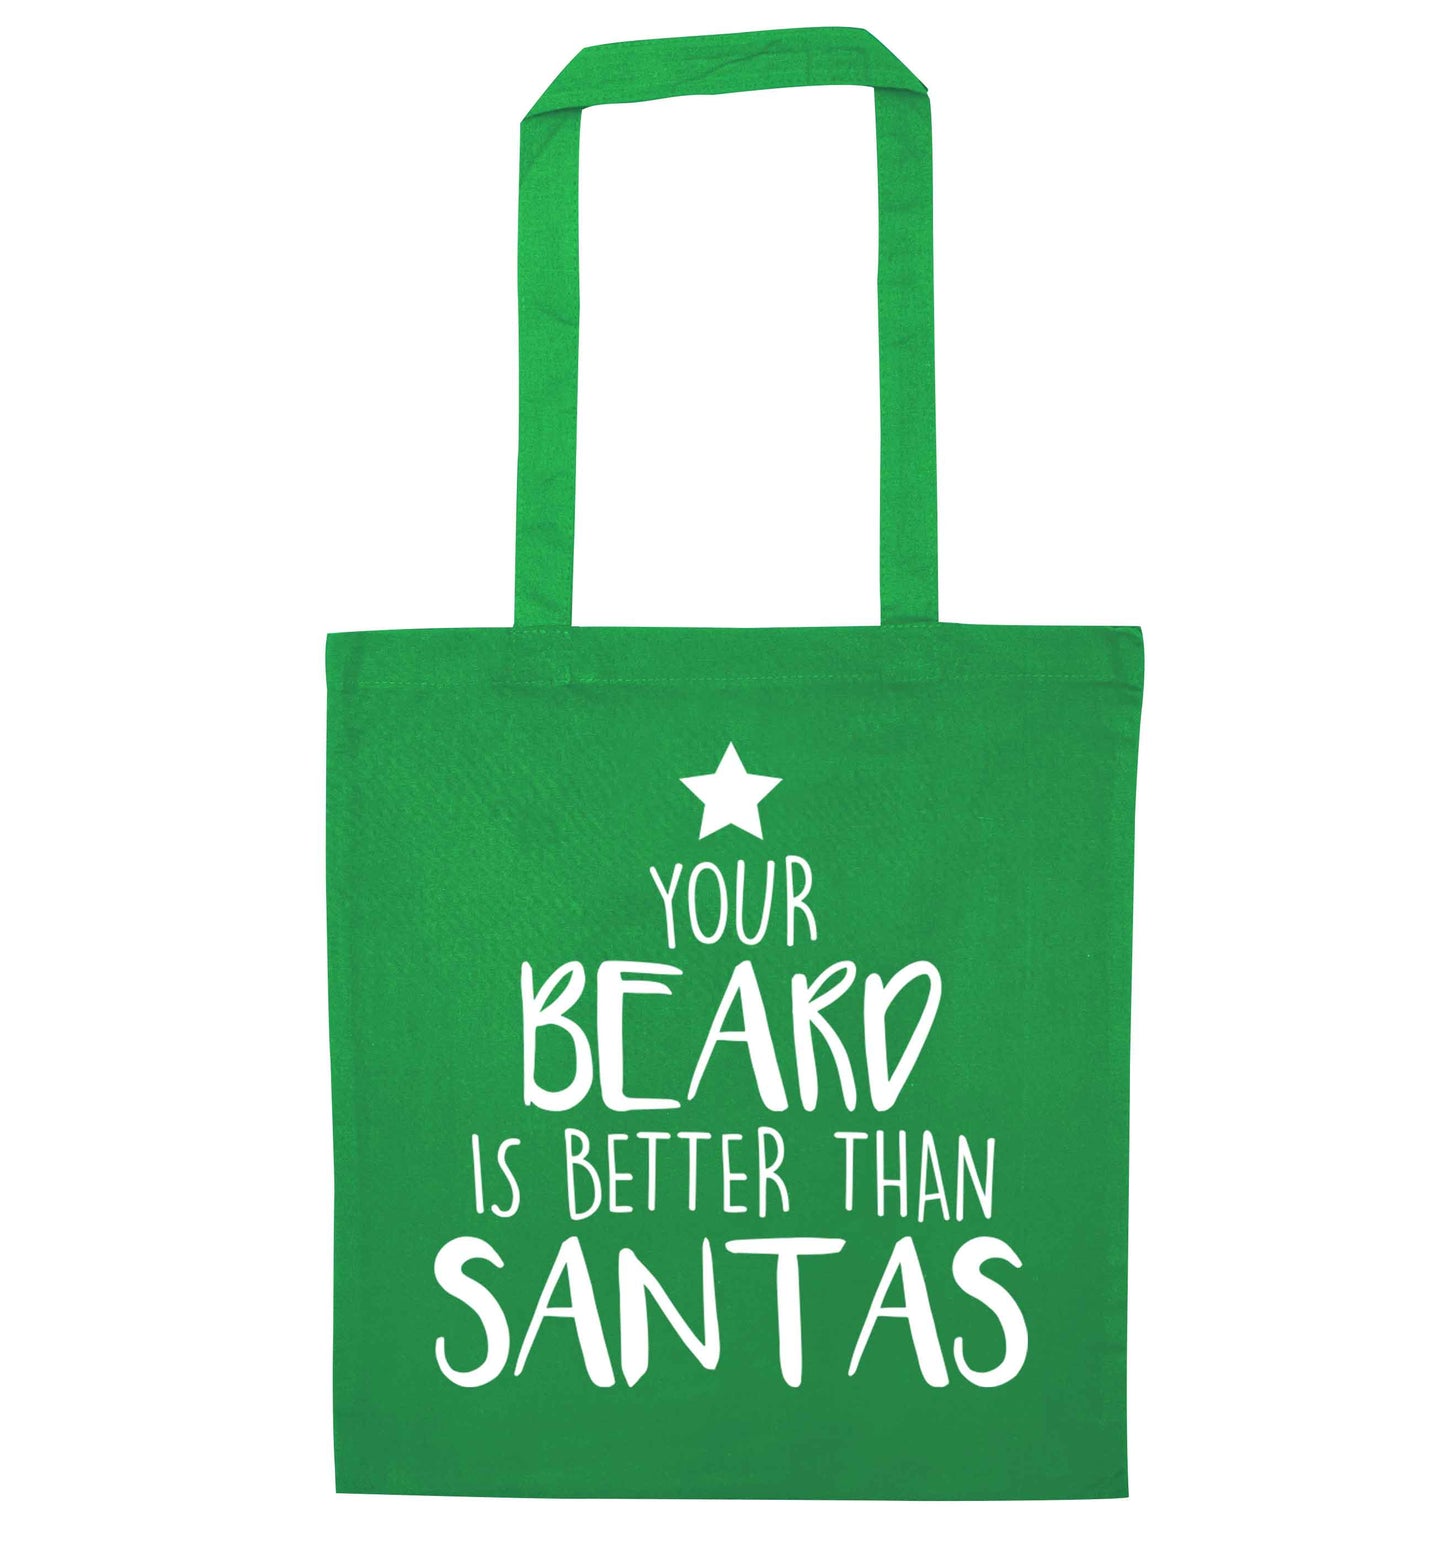 Your Beard Better than Santas green tote bag